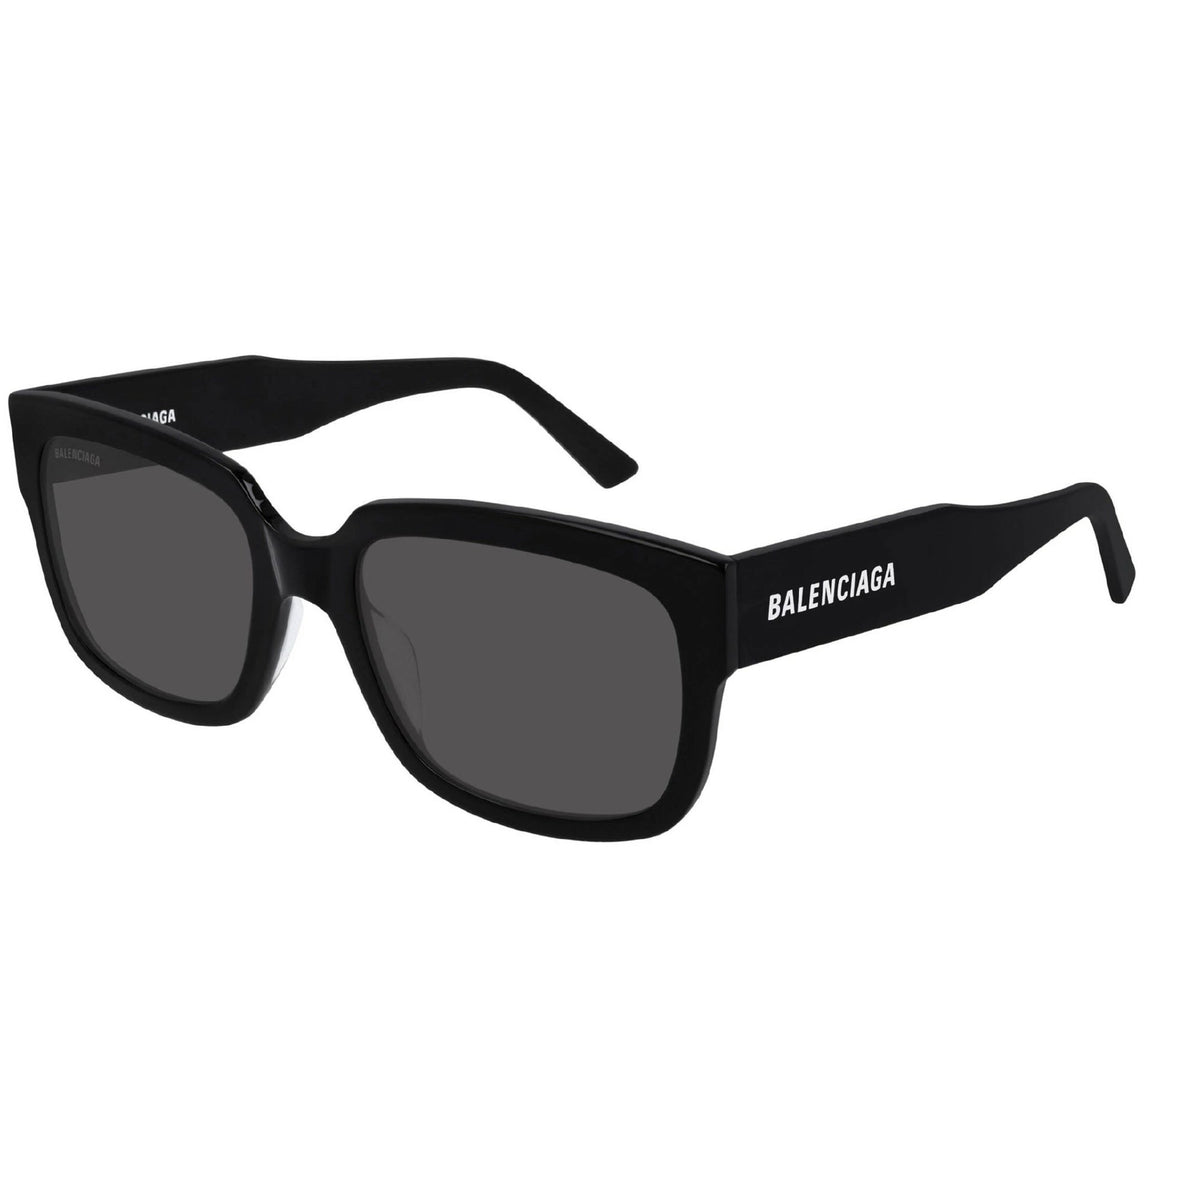 Balenciaga Unisex Sunglasses Fall Winter Black Grey CR 39 CR 39 Shiny BB0049S 001